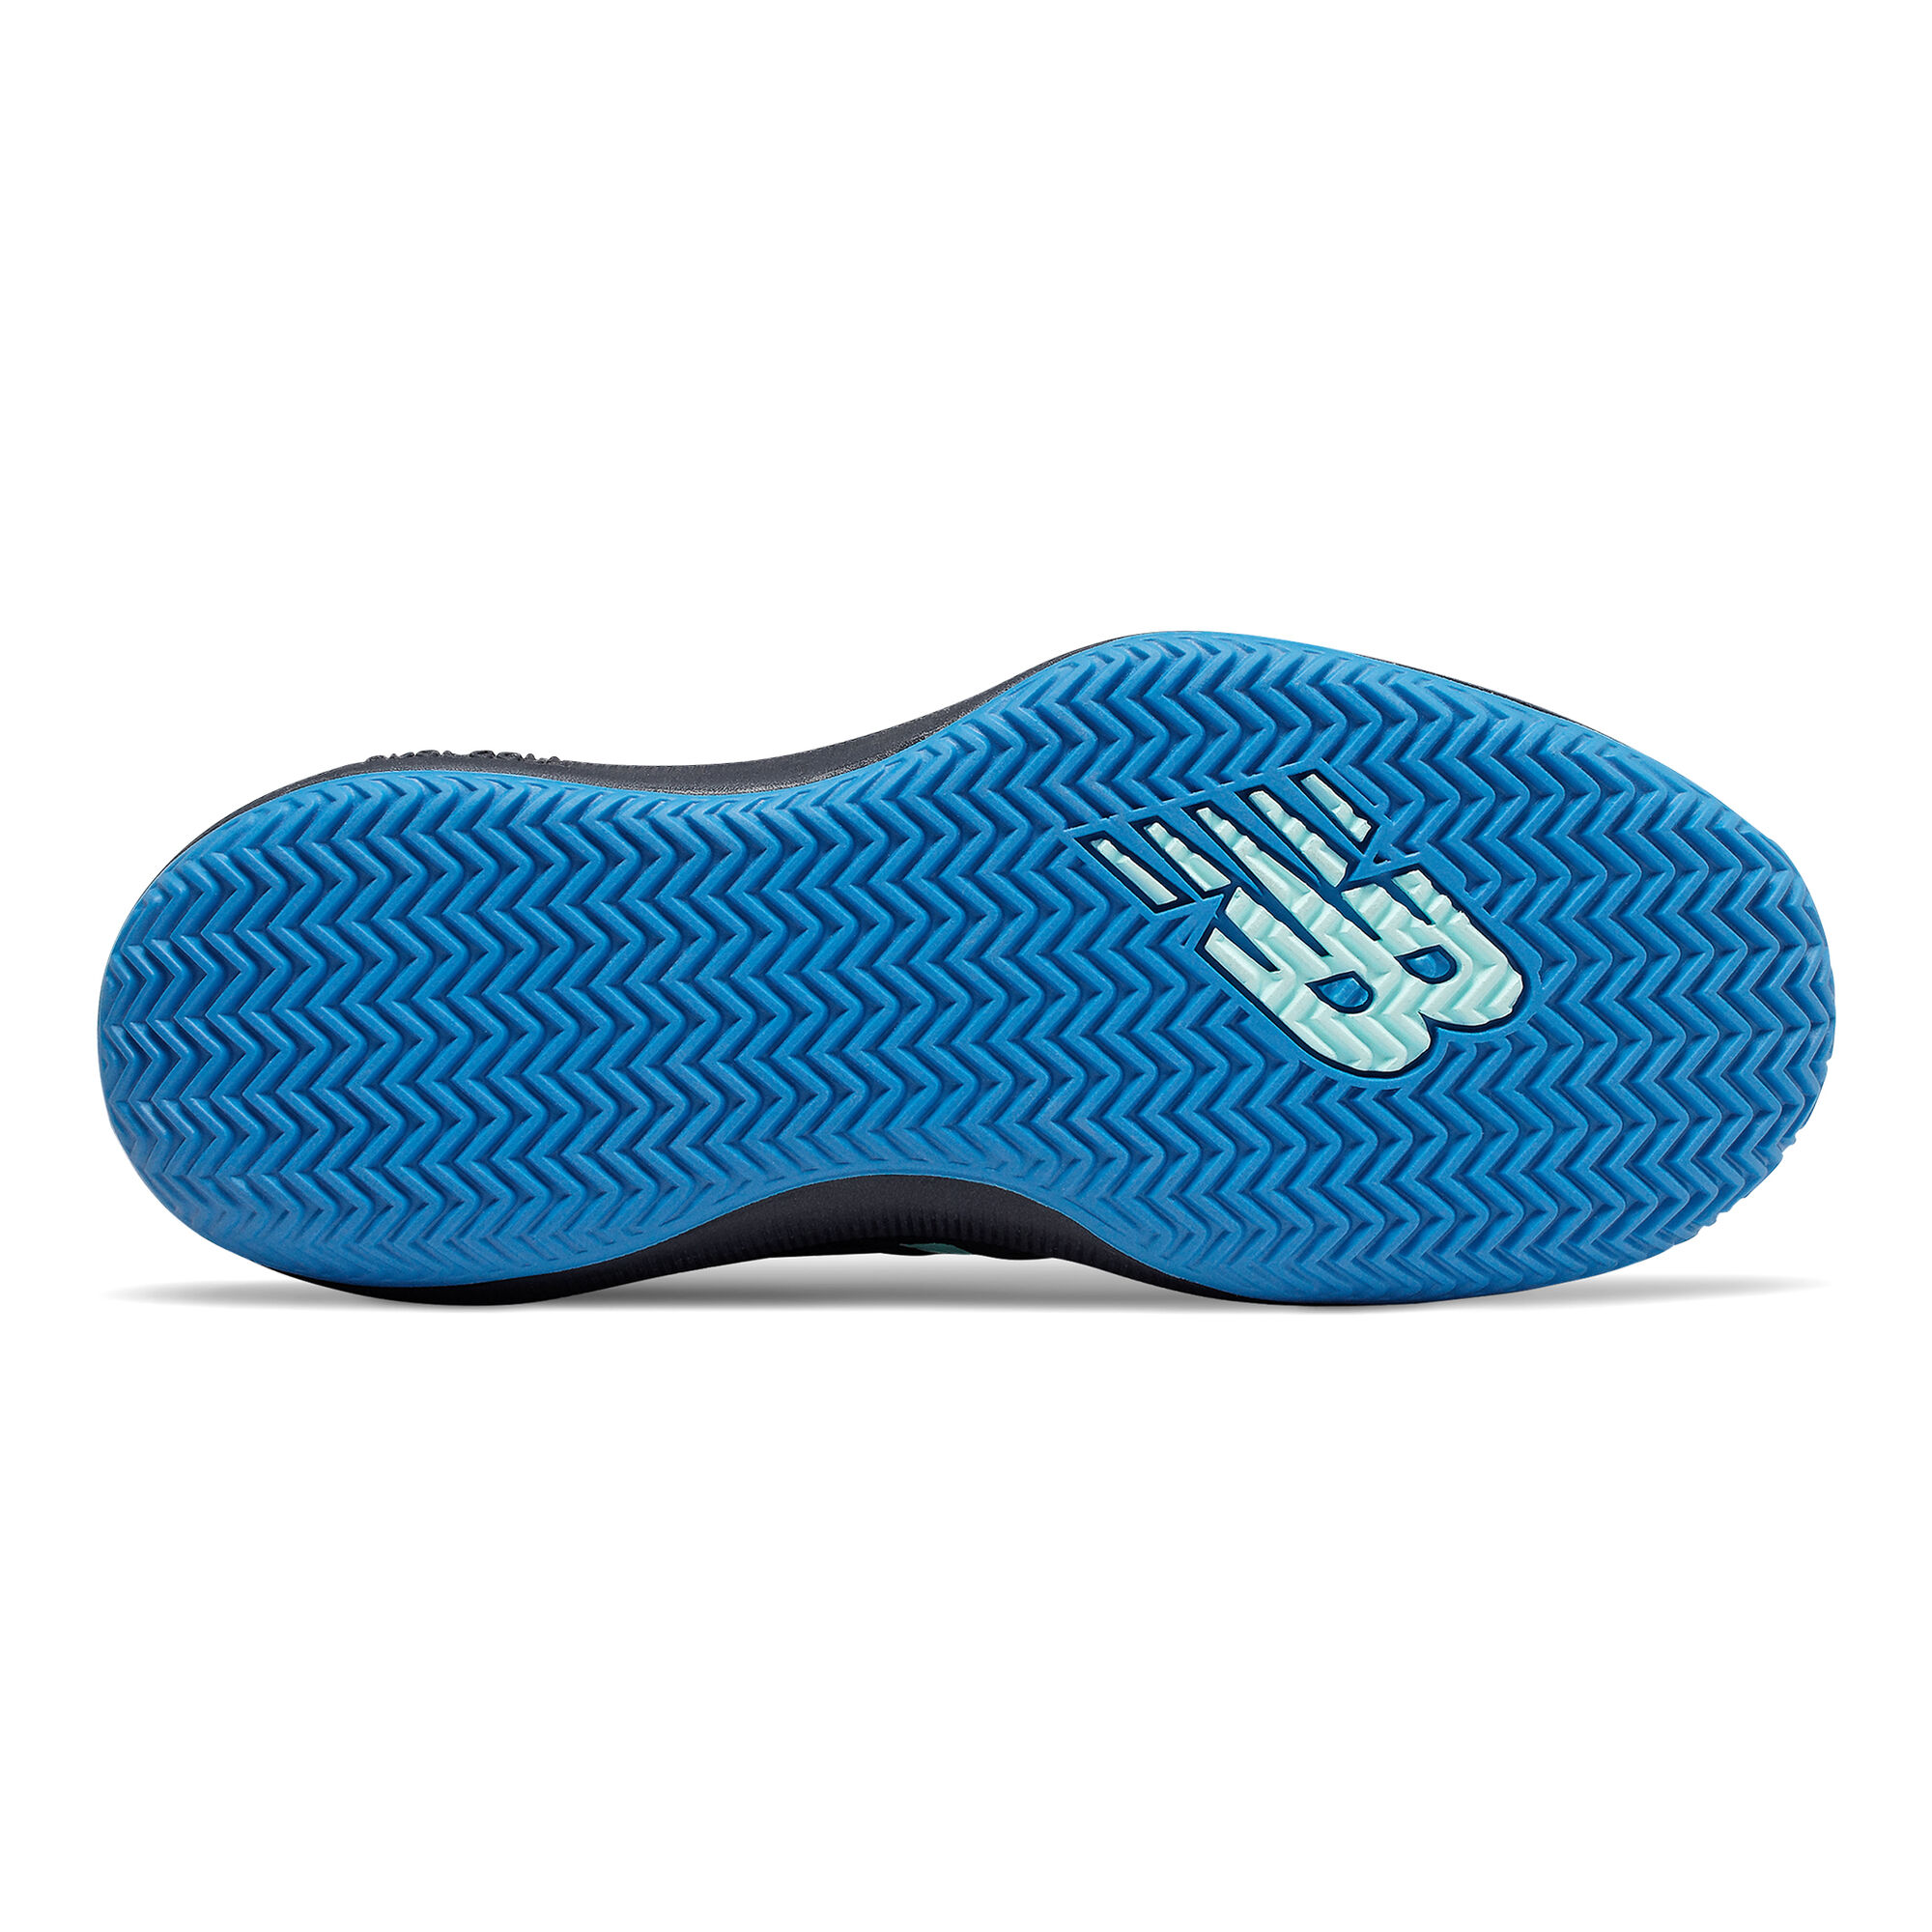 Buy New Balance 996 V4 Clay Court Shoe Men Dark Blue, Mint online ...